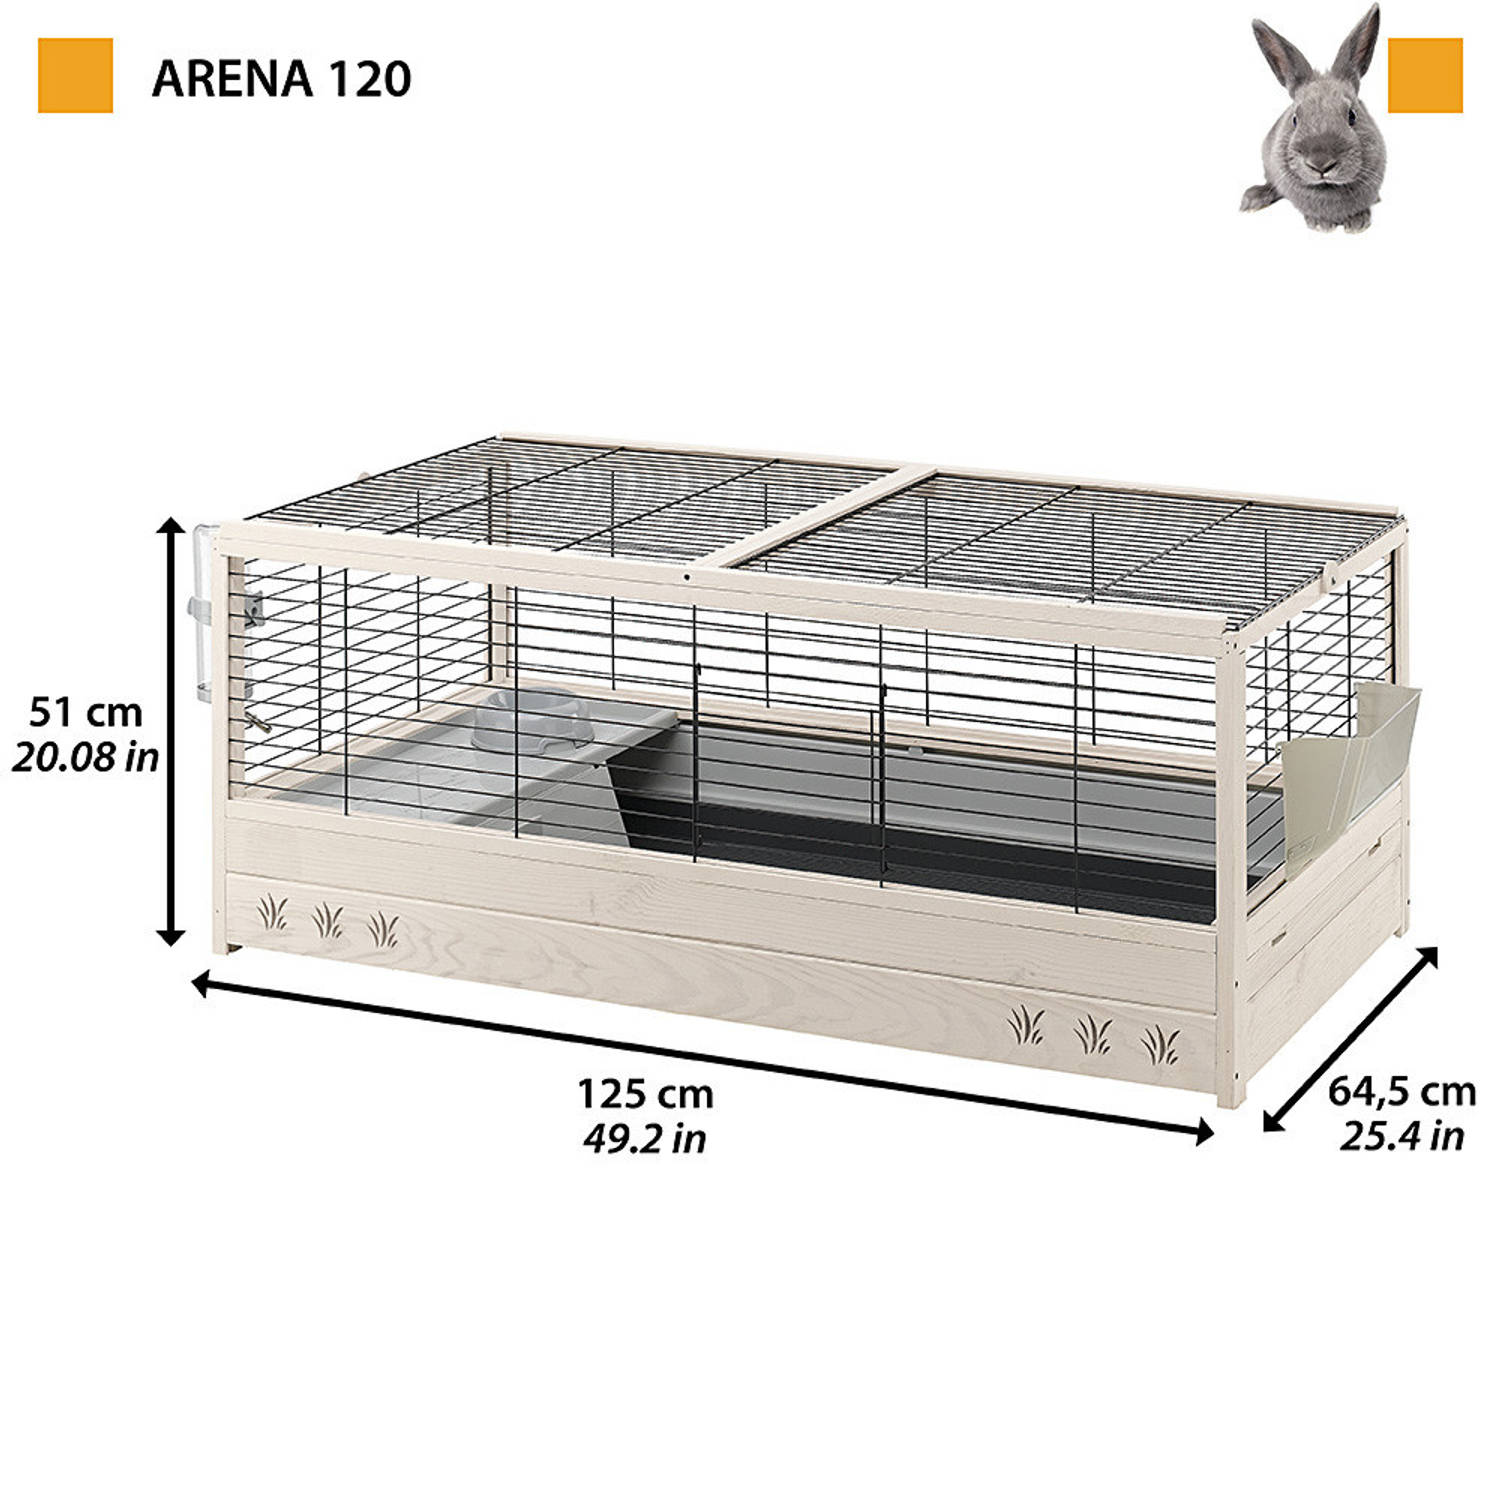 Ferplast konijnenhok Arena 120 hout 125 64,5 cm naturel/grijs |